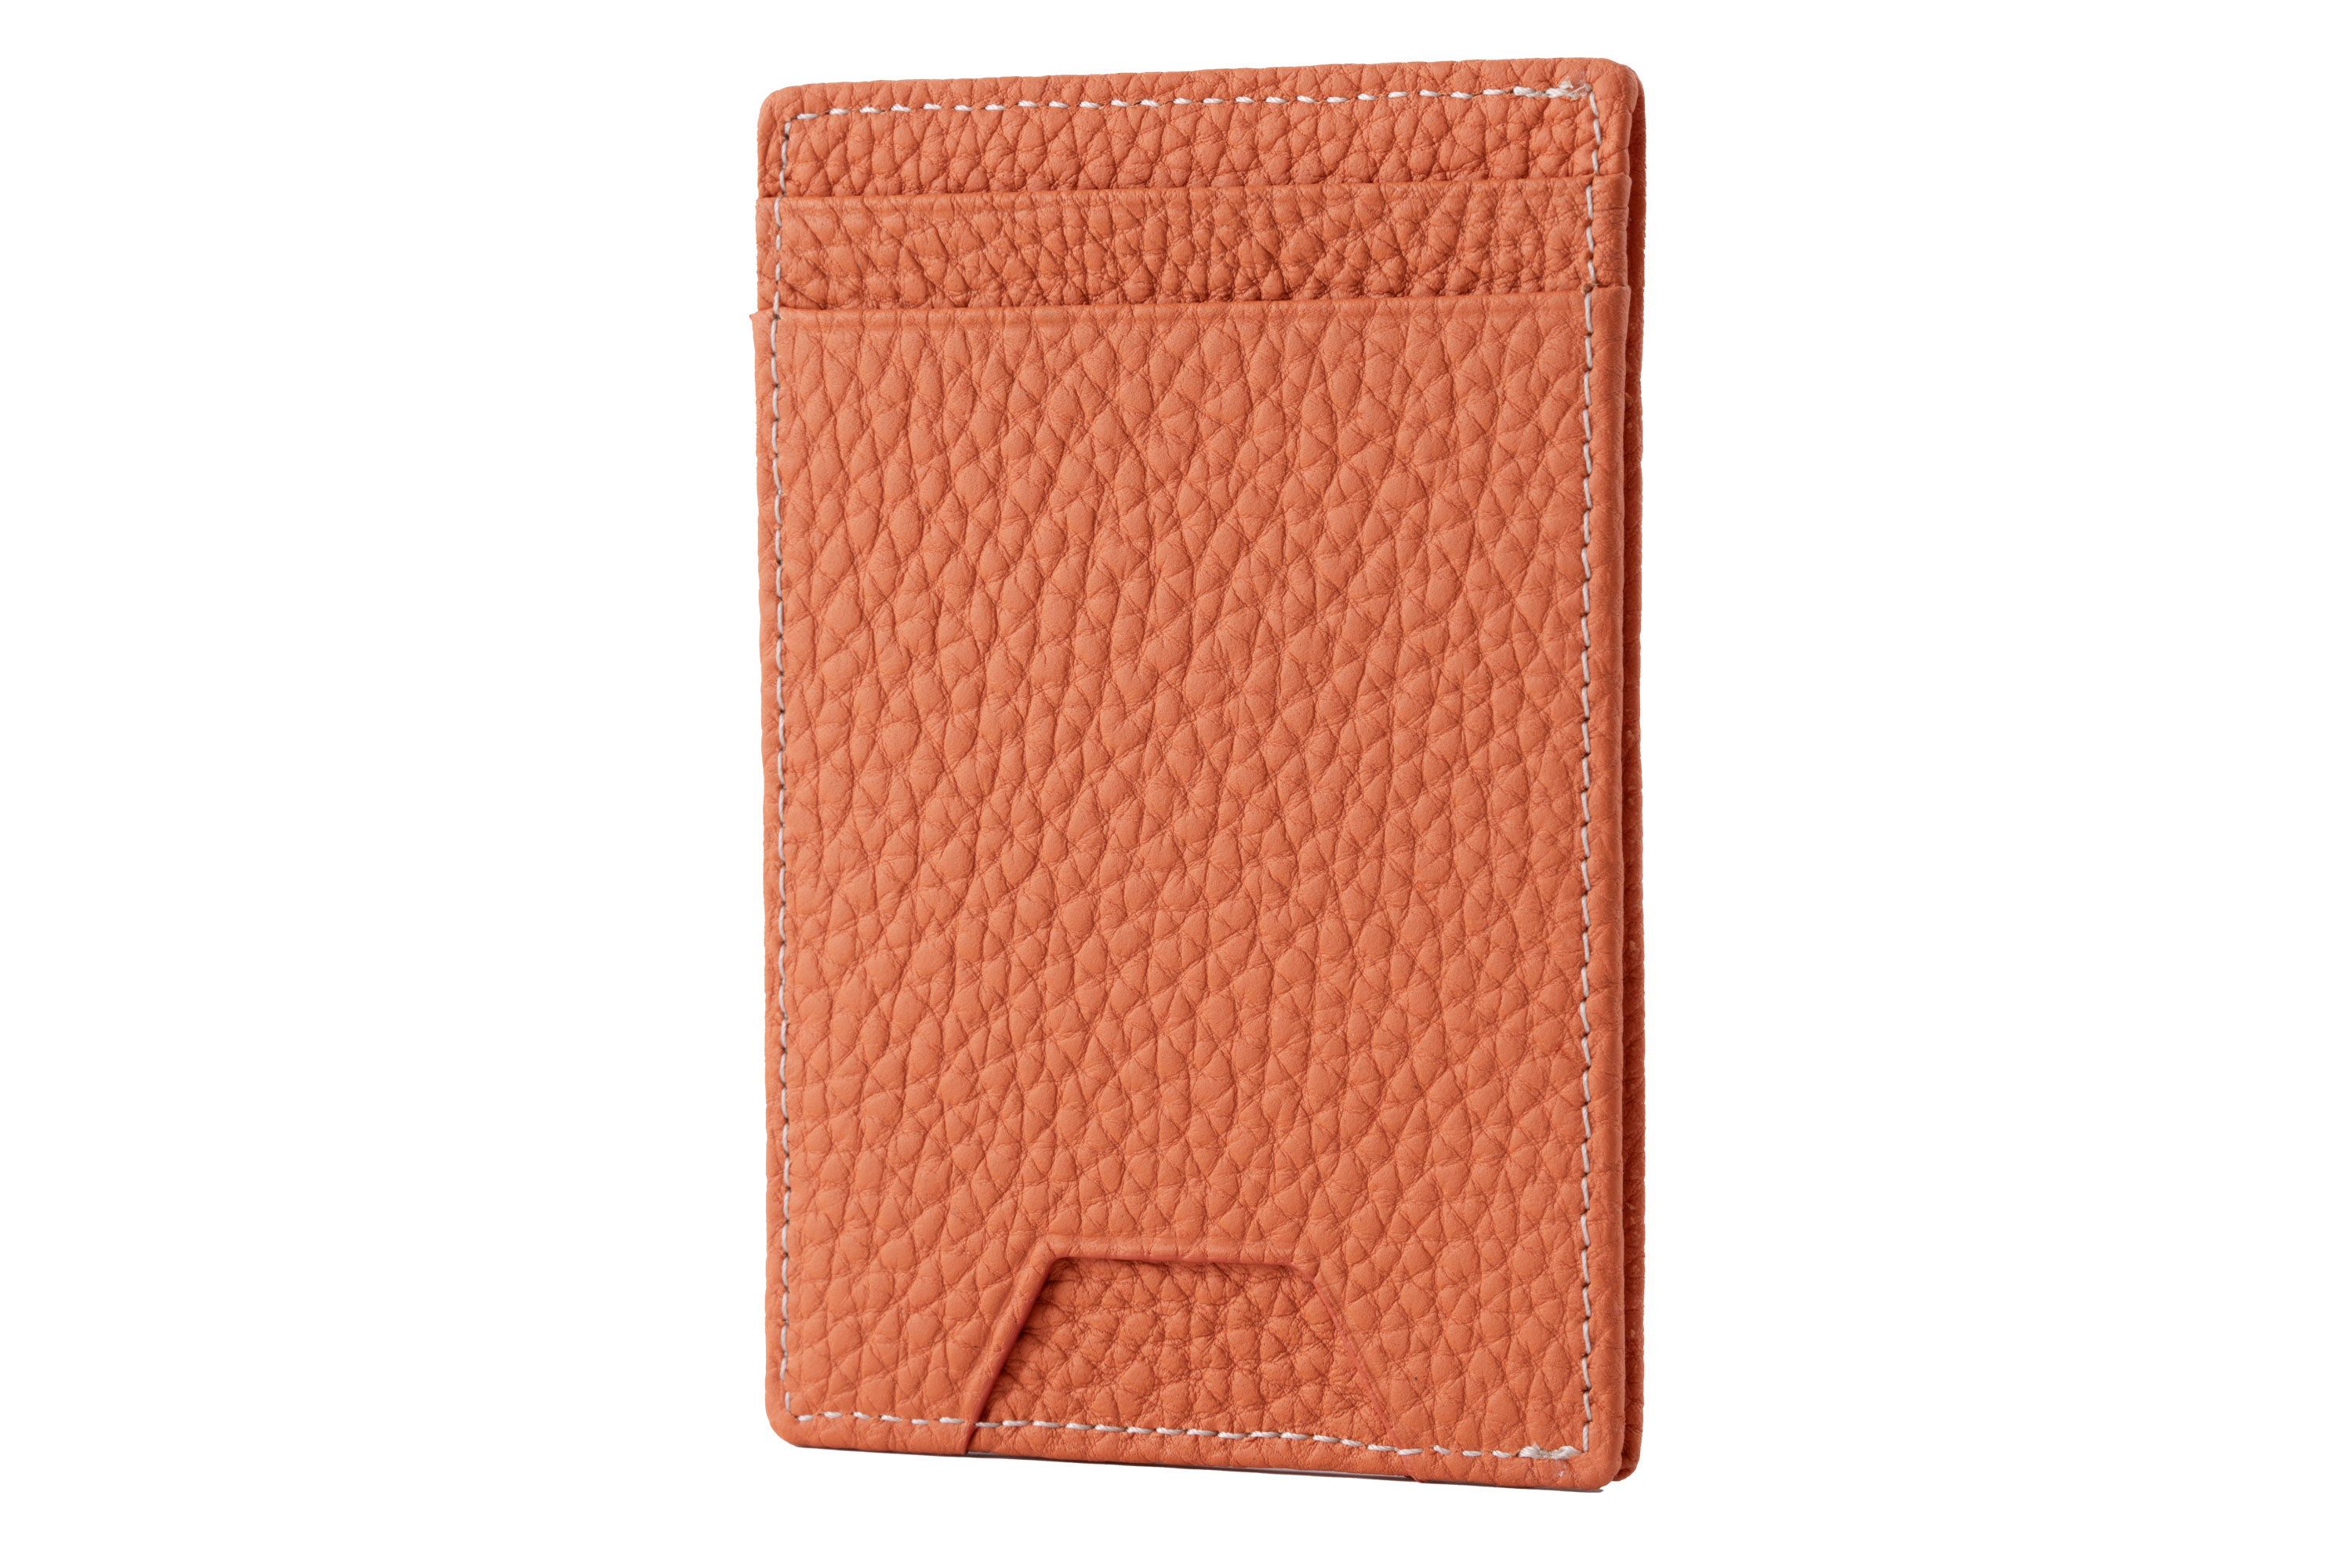 Four Card Carrier Slim Wallet in Orange Togo Leather